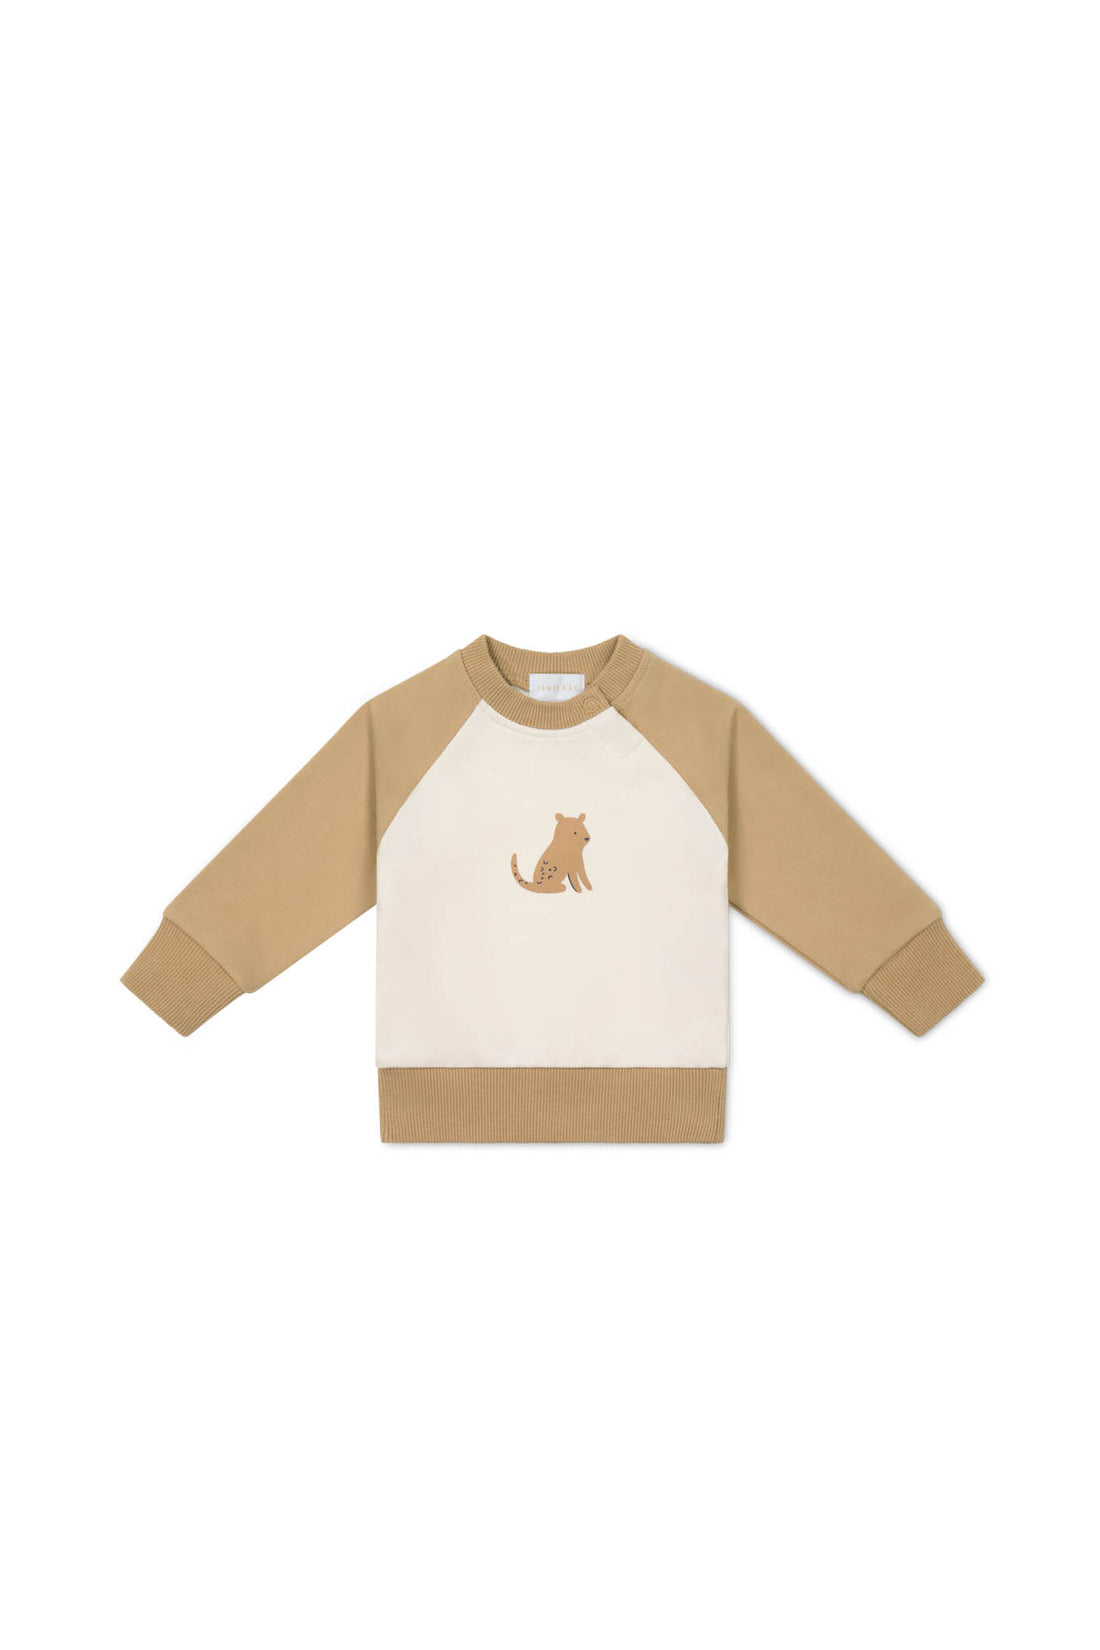 Organic Cotton Tao Sweatshirt - Bronzed Leopard Childrens Sweatshirt from Jamie Kay NZ